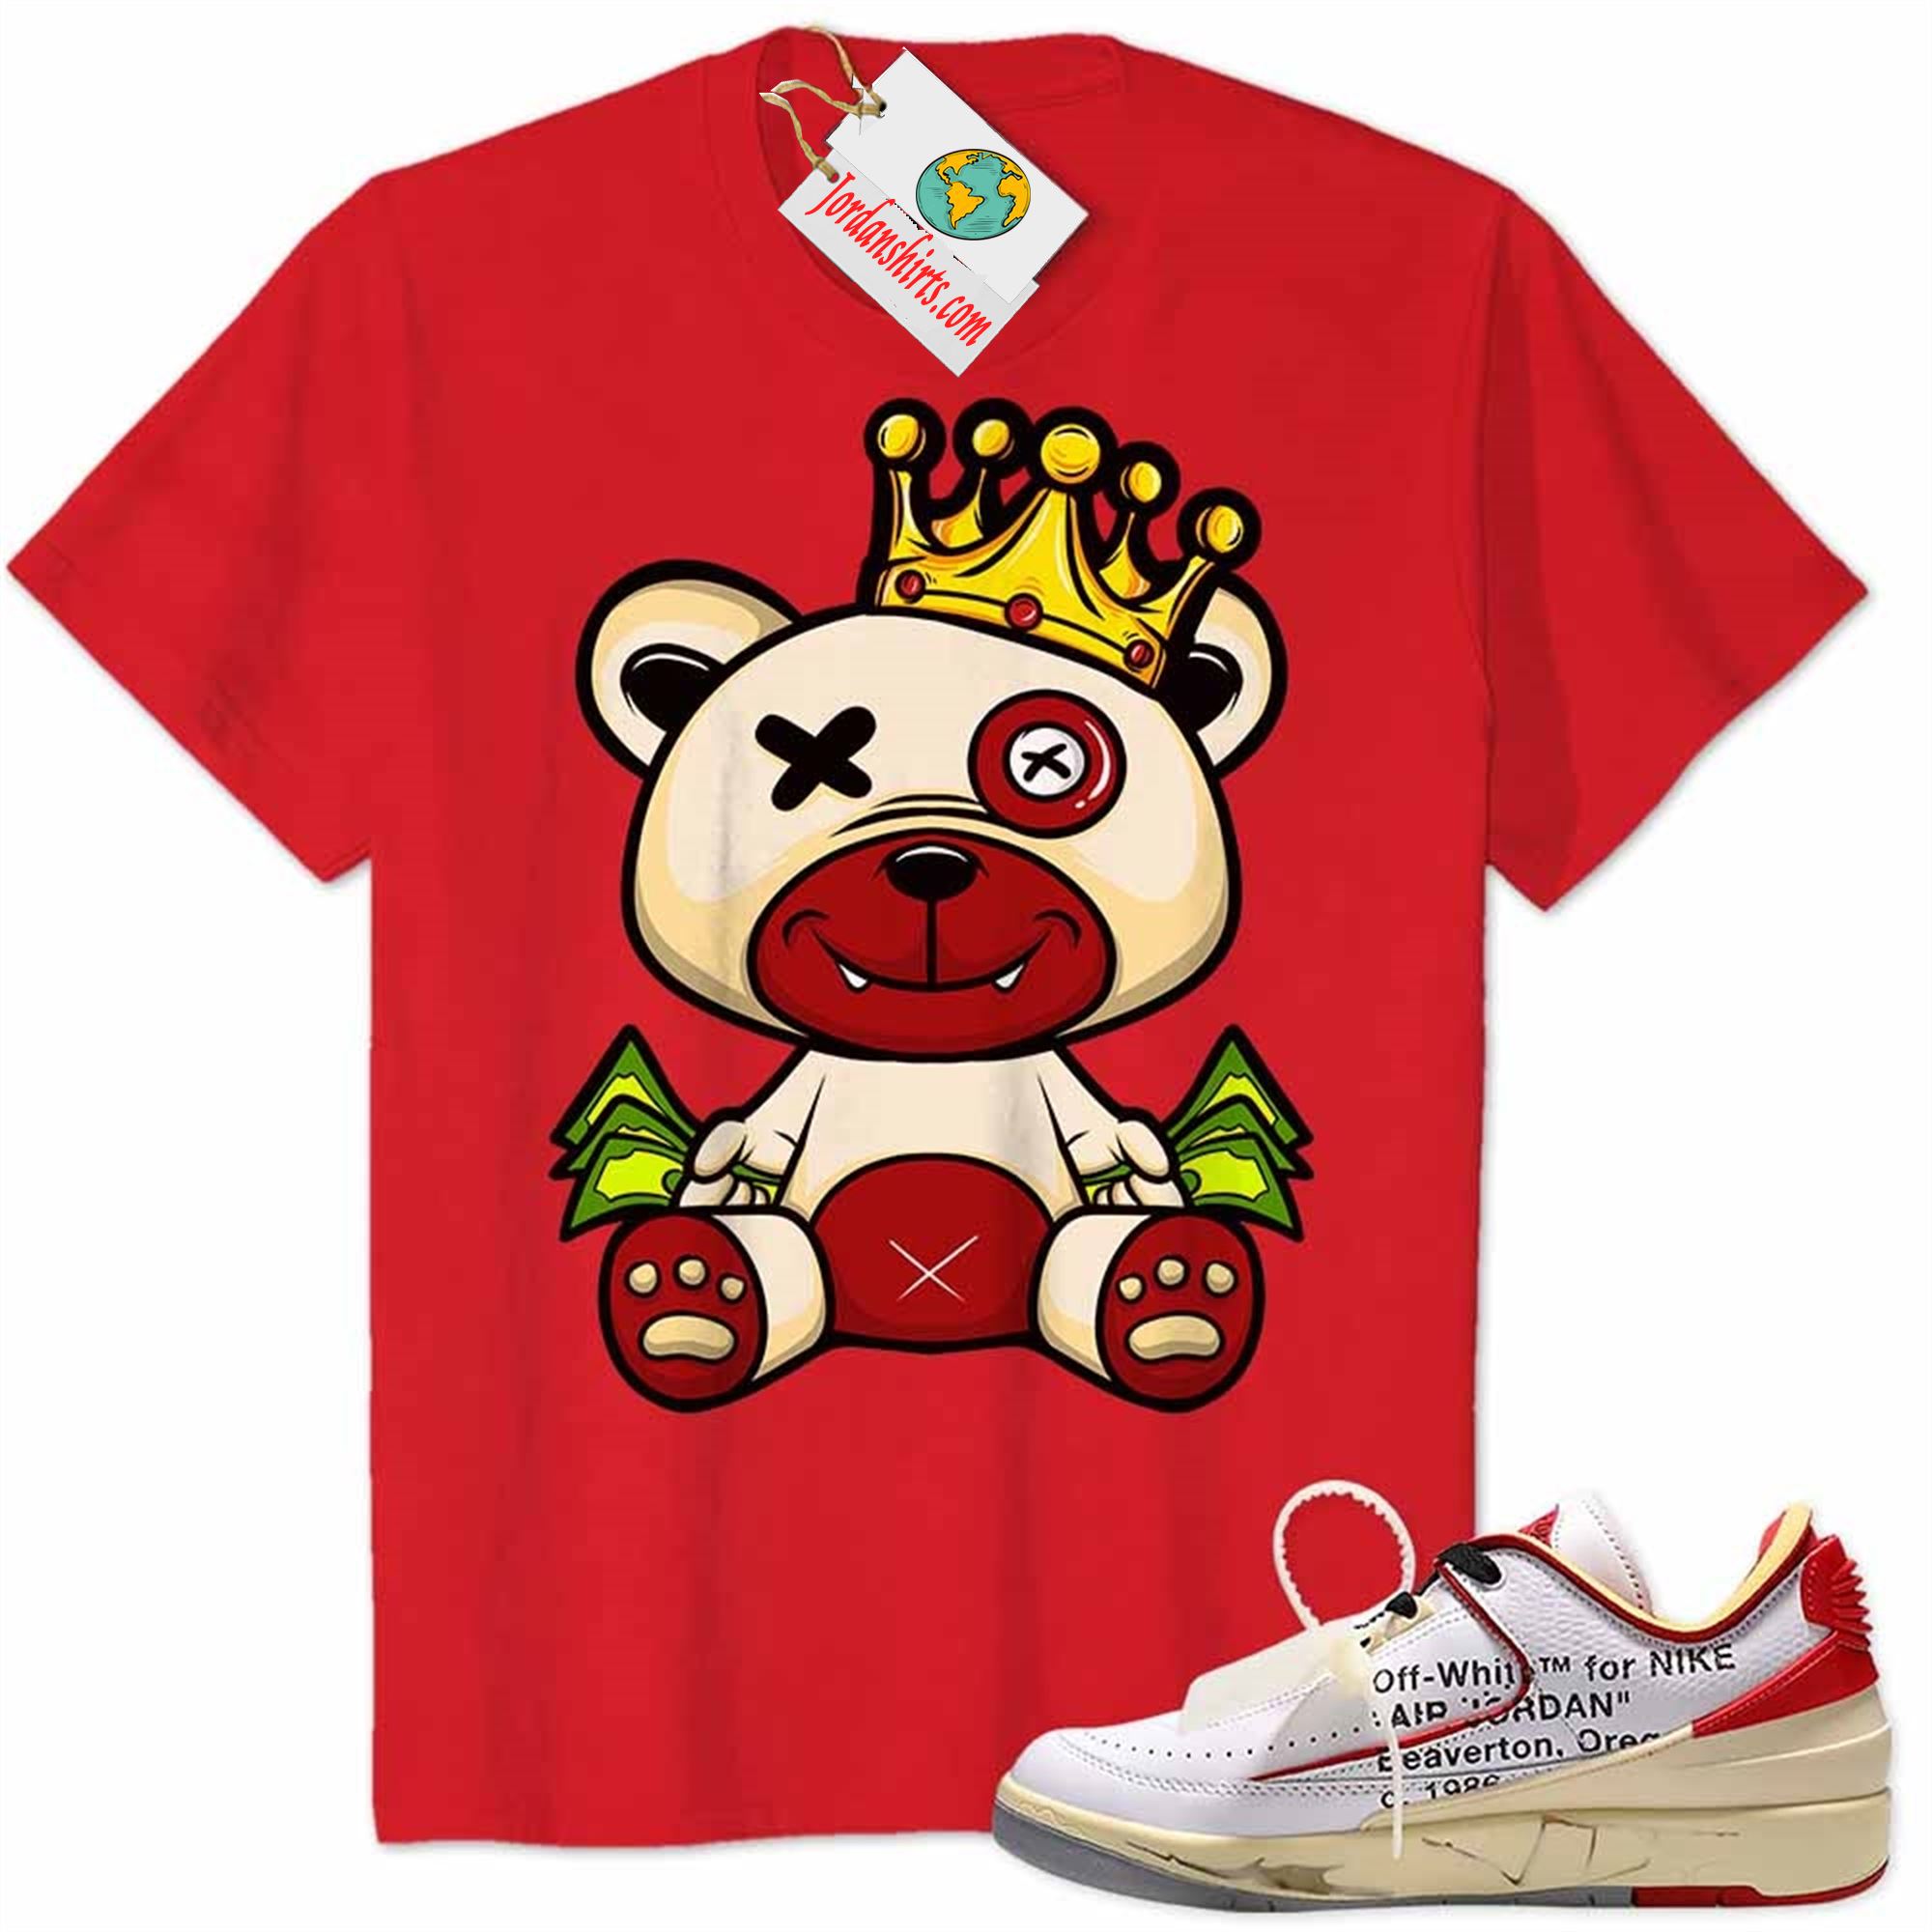 Jordan 2 Shirt, King Teddy Bear Hold Money Red Air Jordan 2 Low White Red Off-white 2s Full Size Up To 5xl